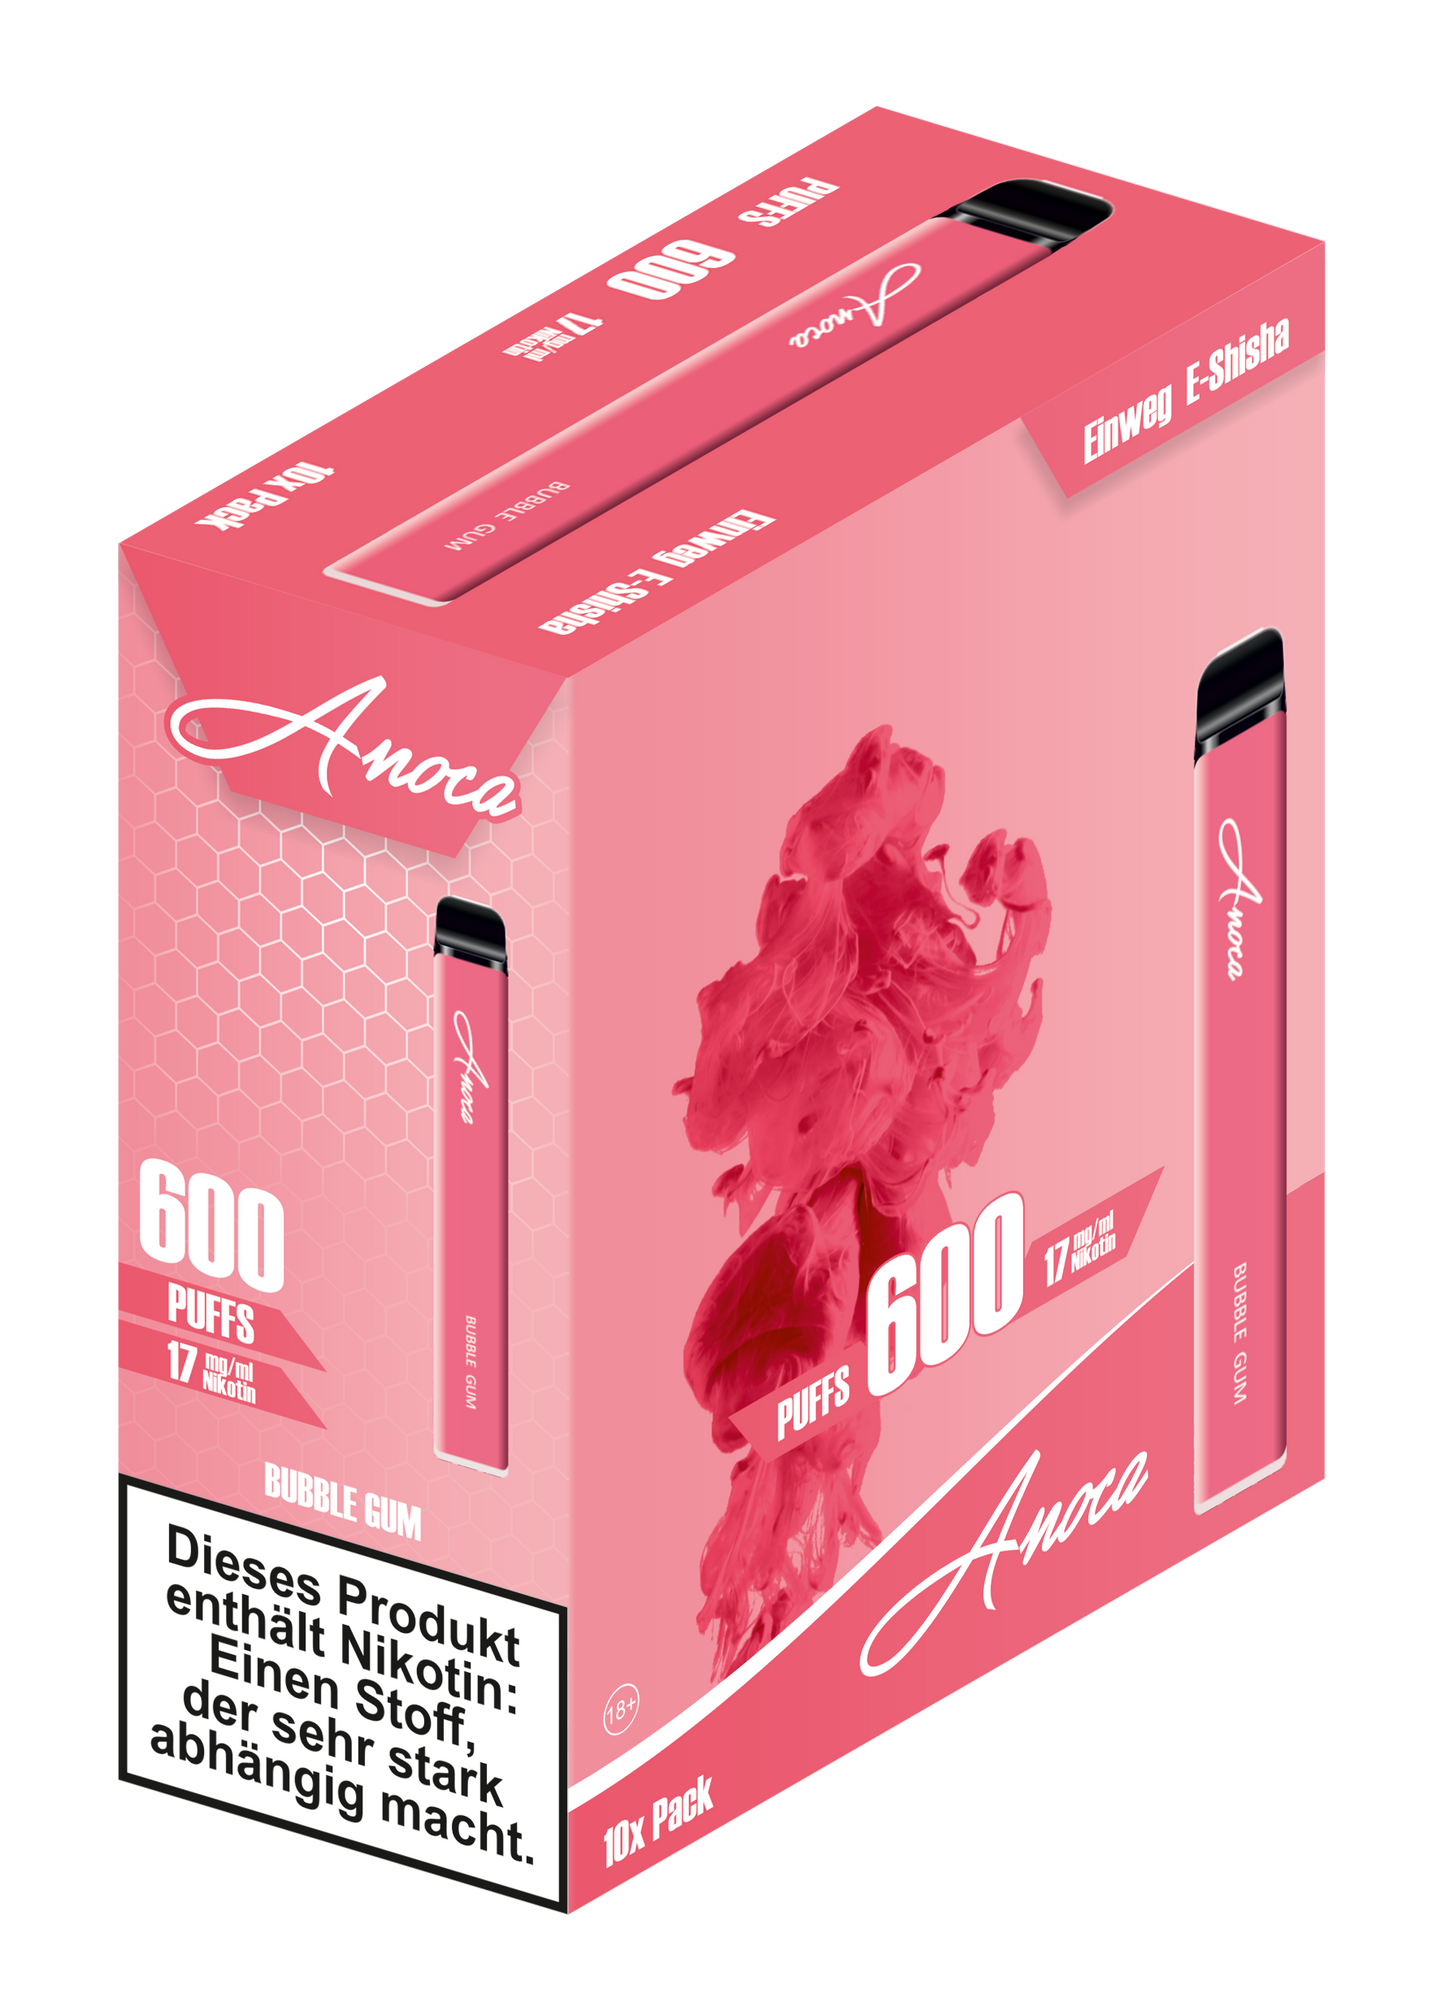 Anoca - Einweg E-Shisha 600 Puffs - Bubble Gum - 10er Pack